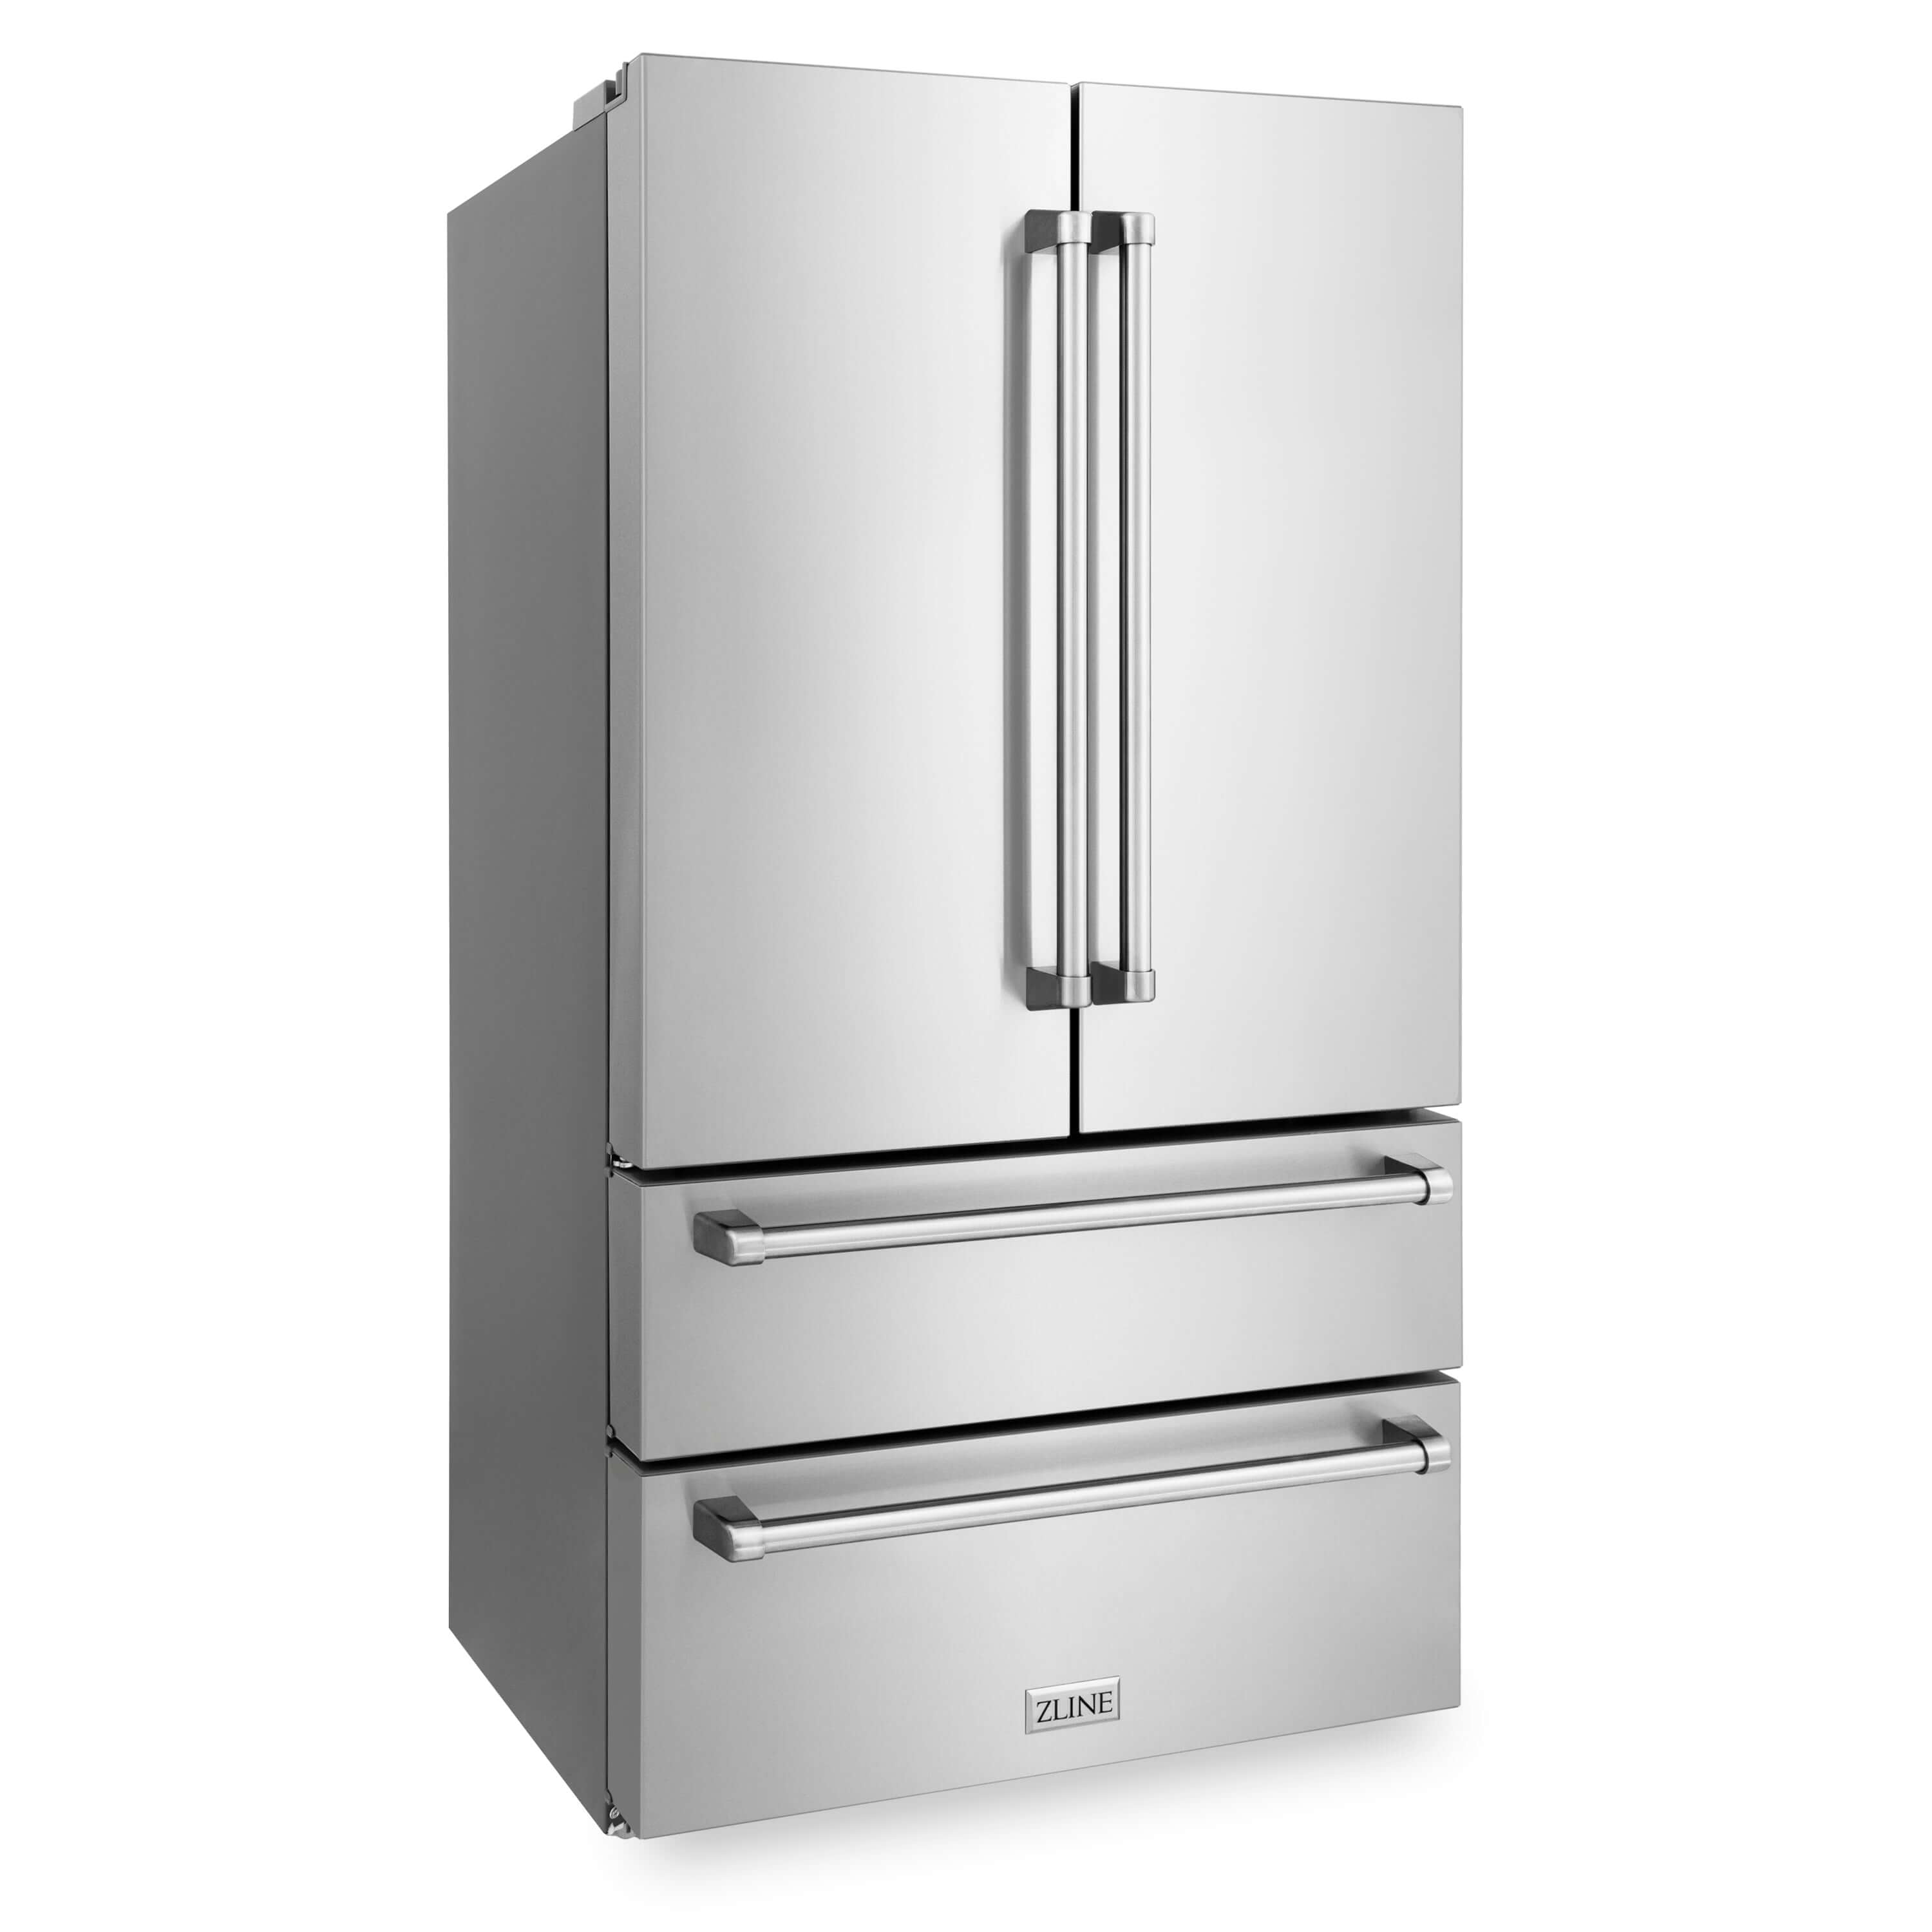 ZLINE 36 in. Freestanding French Door Refrigerator with Ice Maker in Fingerprint Resistant Stainless Steel (RFM-36) Side View